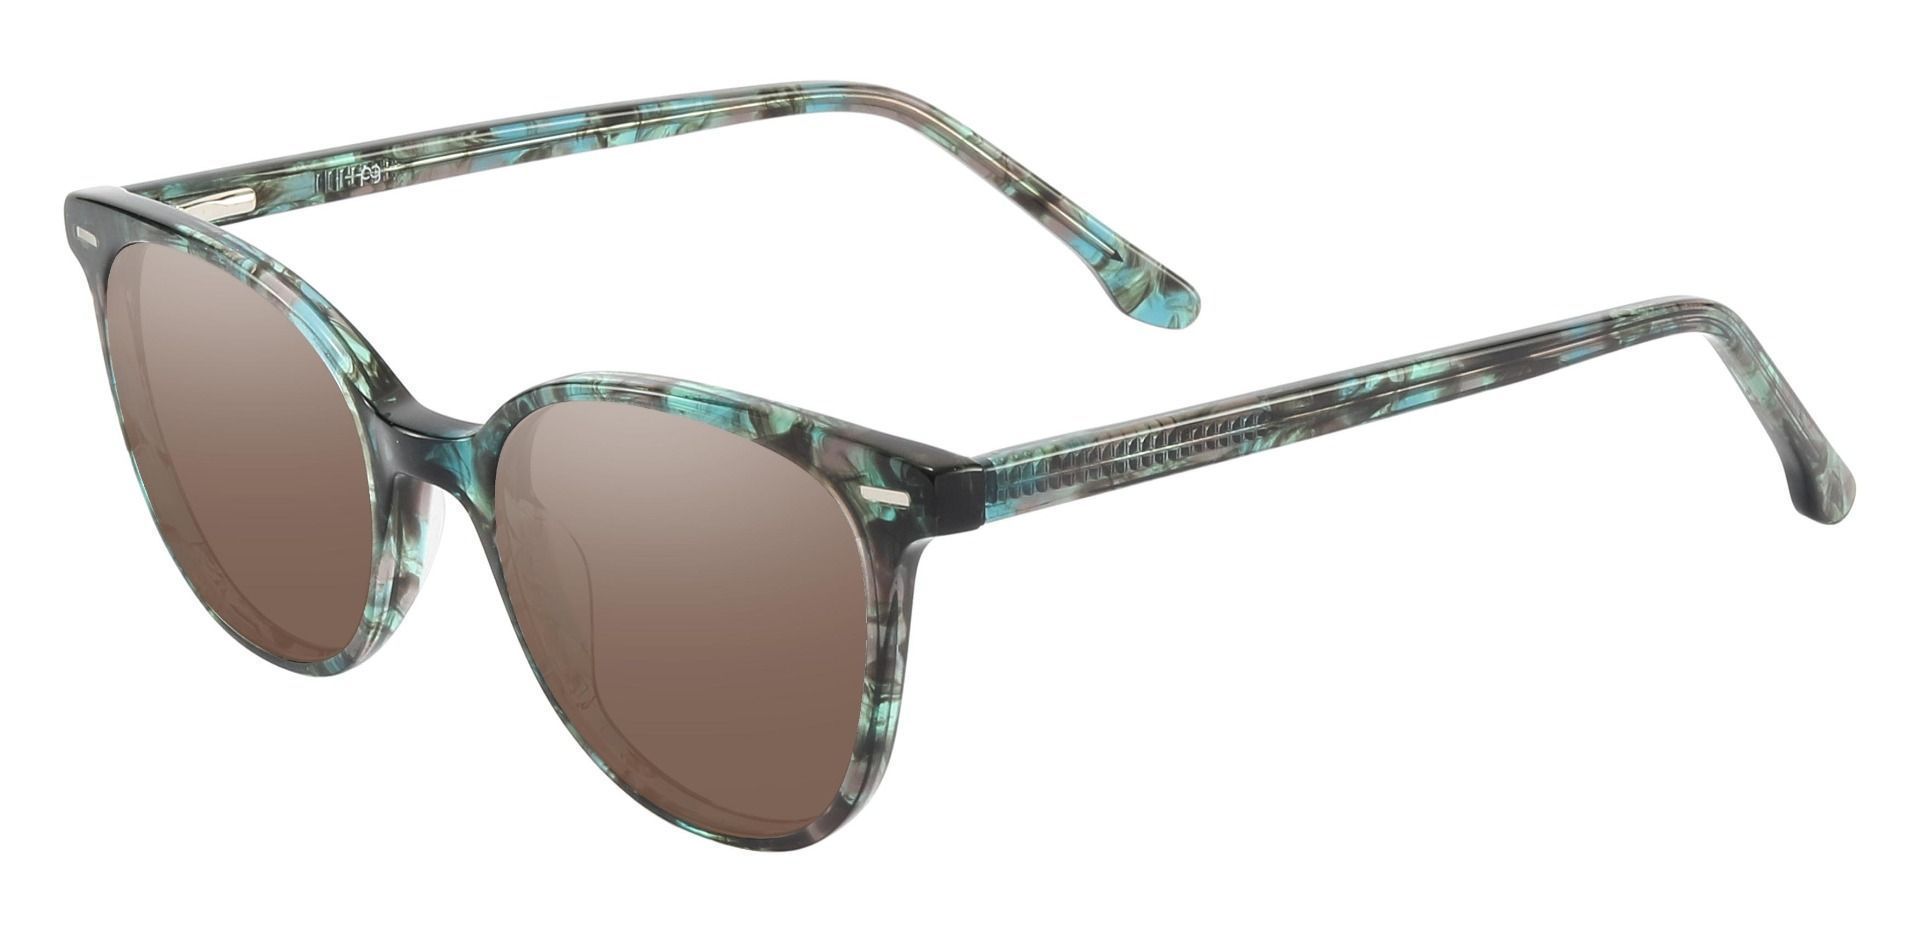 Chili Oval Progressive Sunglasses - Green Frame With Brown Lenses